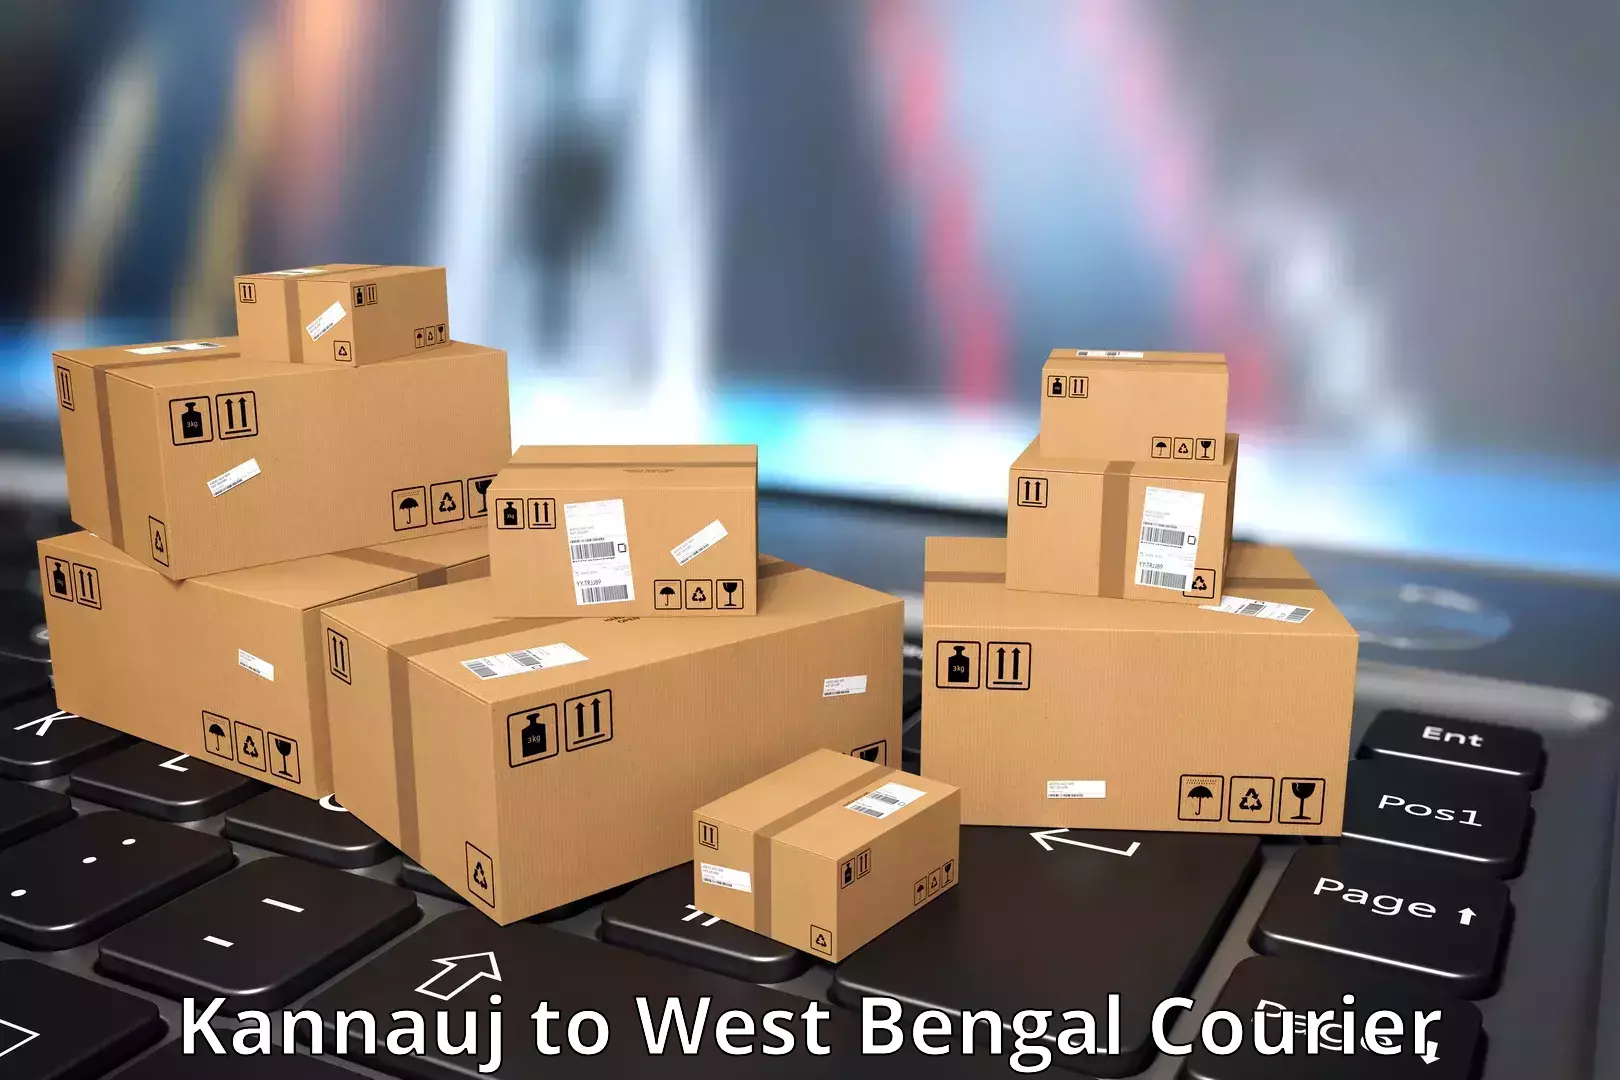 Courier service comparison Kannauj to Raiganj